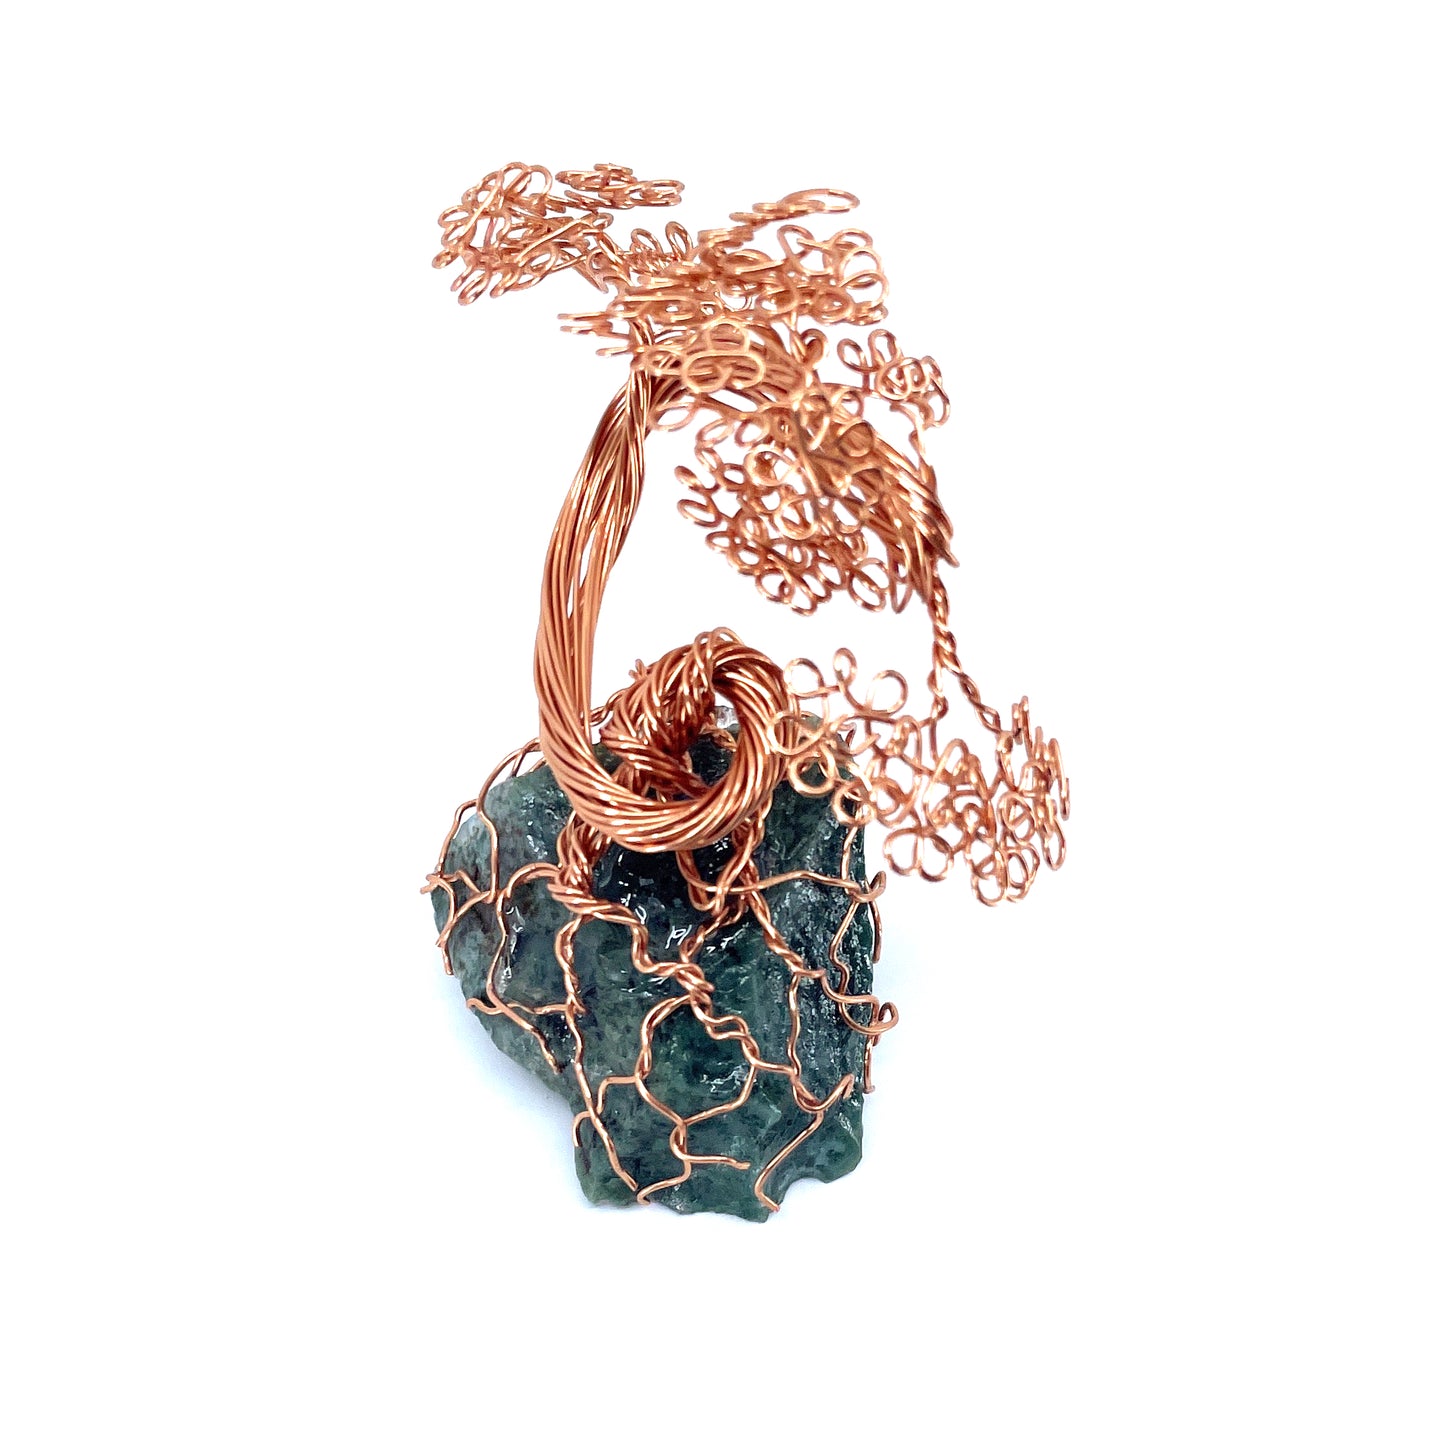 Mini Copper Bonsai Tree- Moss Agate